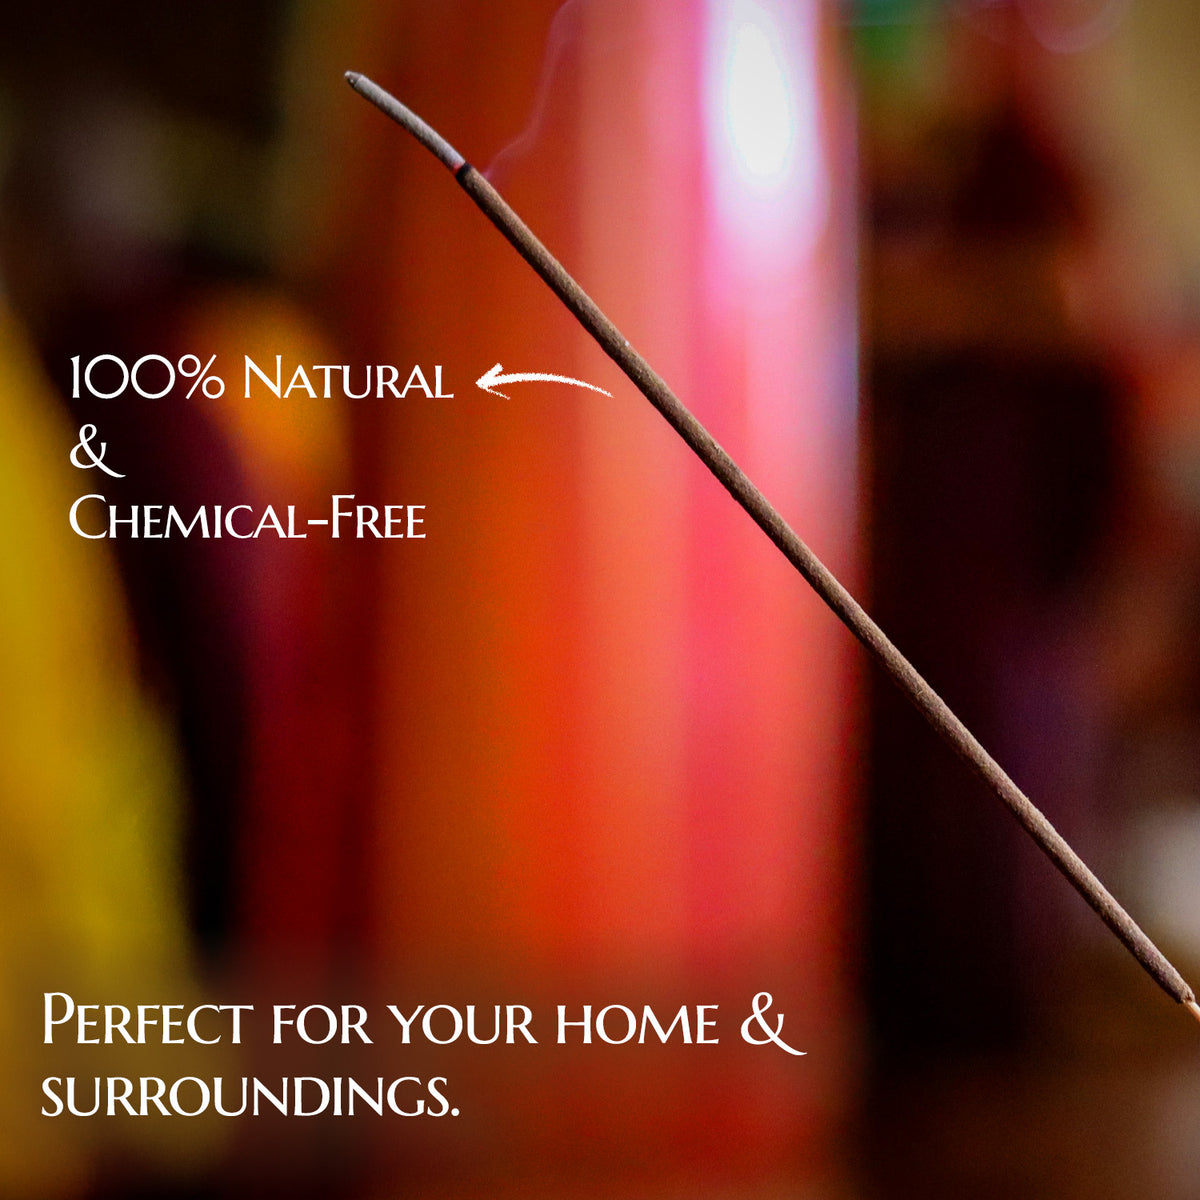 Puremazing Natural Incense Sticks| Incense Stick Fragrance Reduce Stress| Suitable For Pooja &Festivals